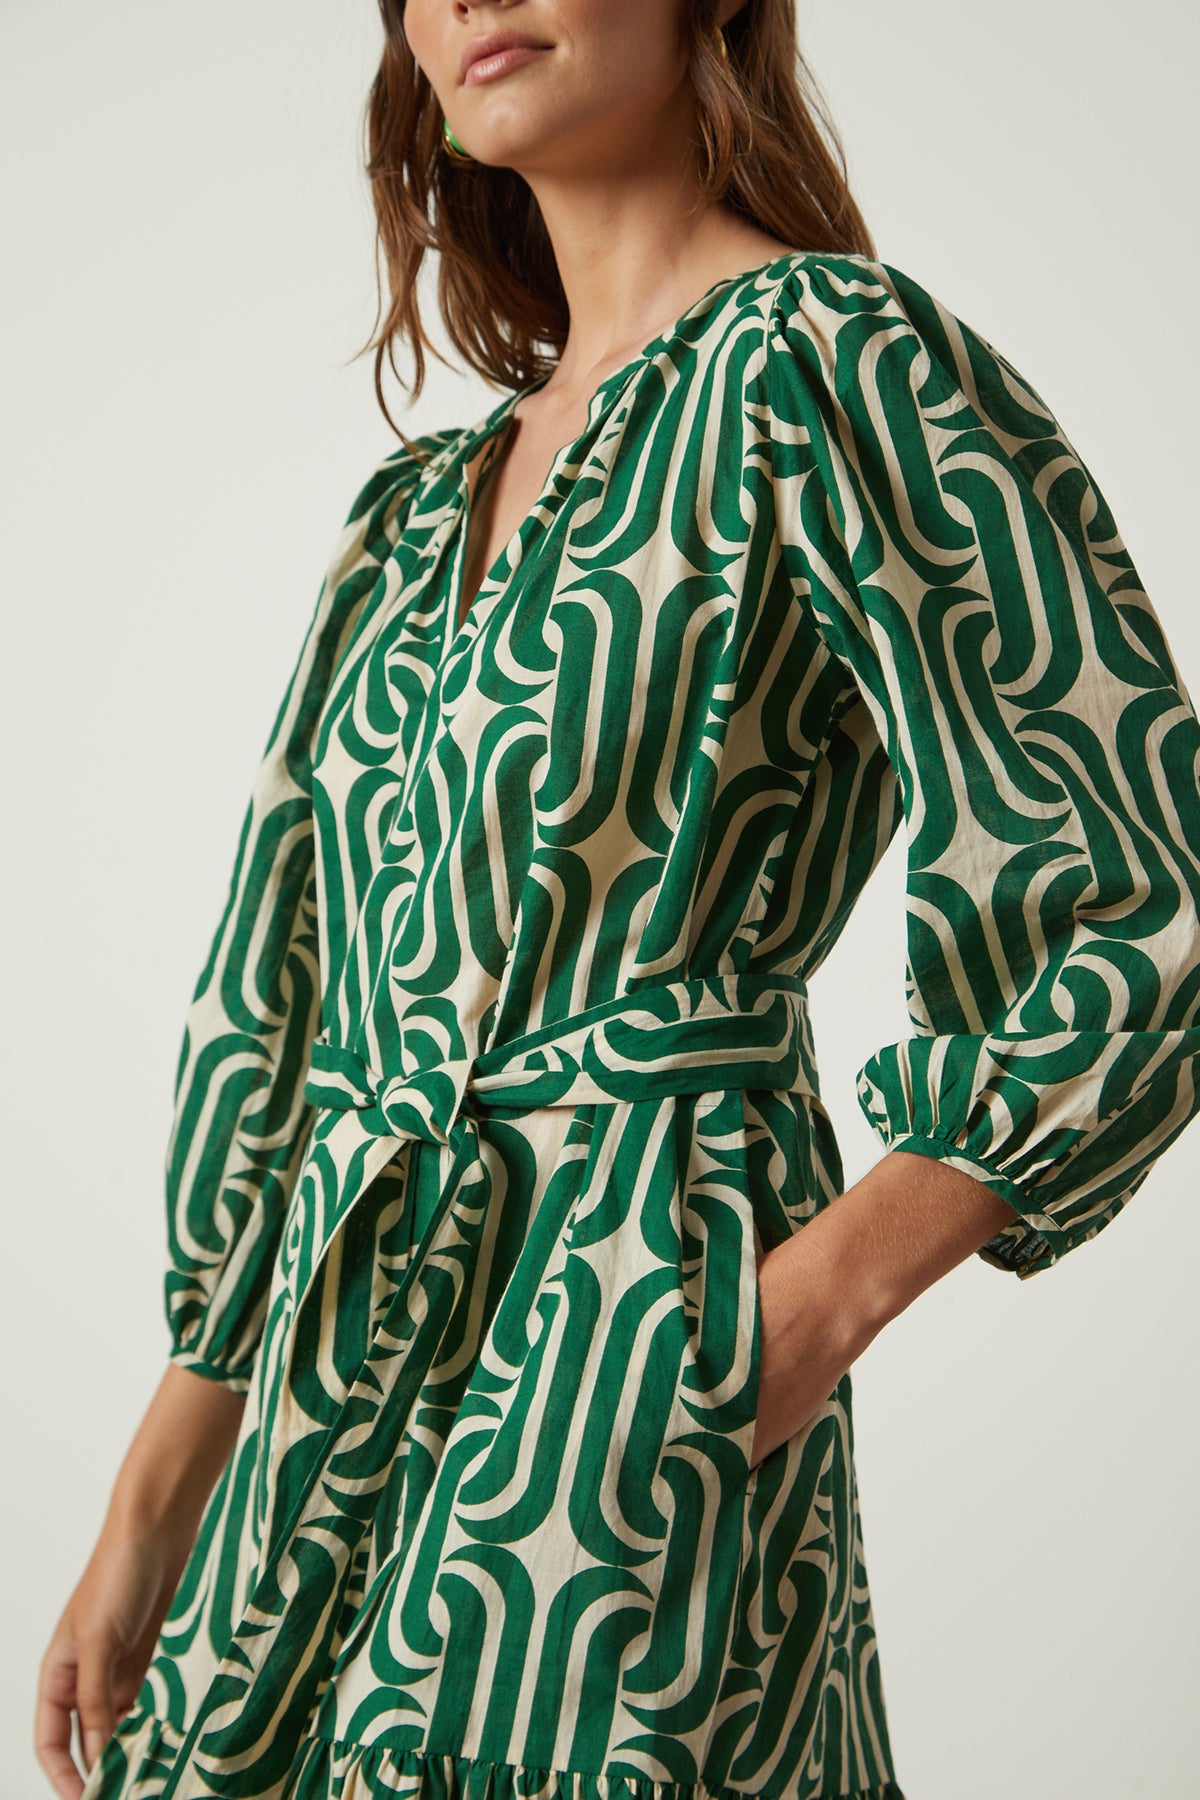 The model is wearing a Velvet by Graham & Spencer FELICITY PRINTED BOHO DRESS with a ruffled hemline.-26142628446401